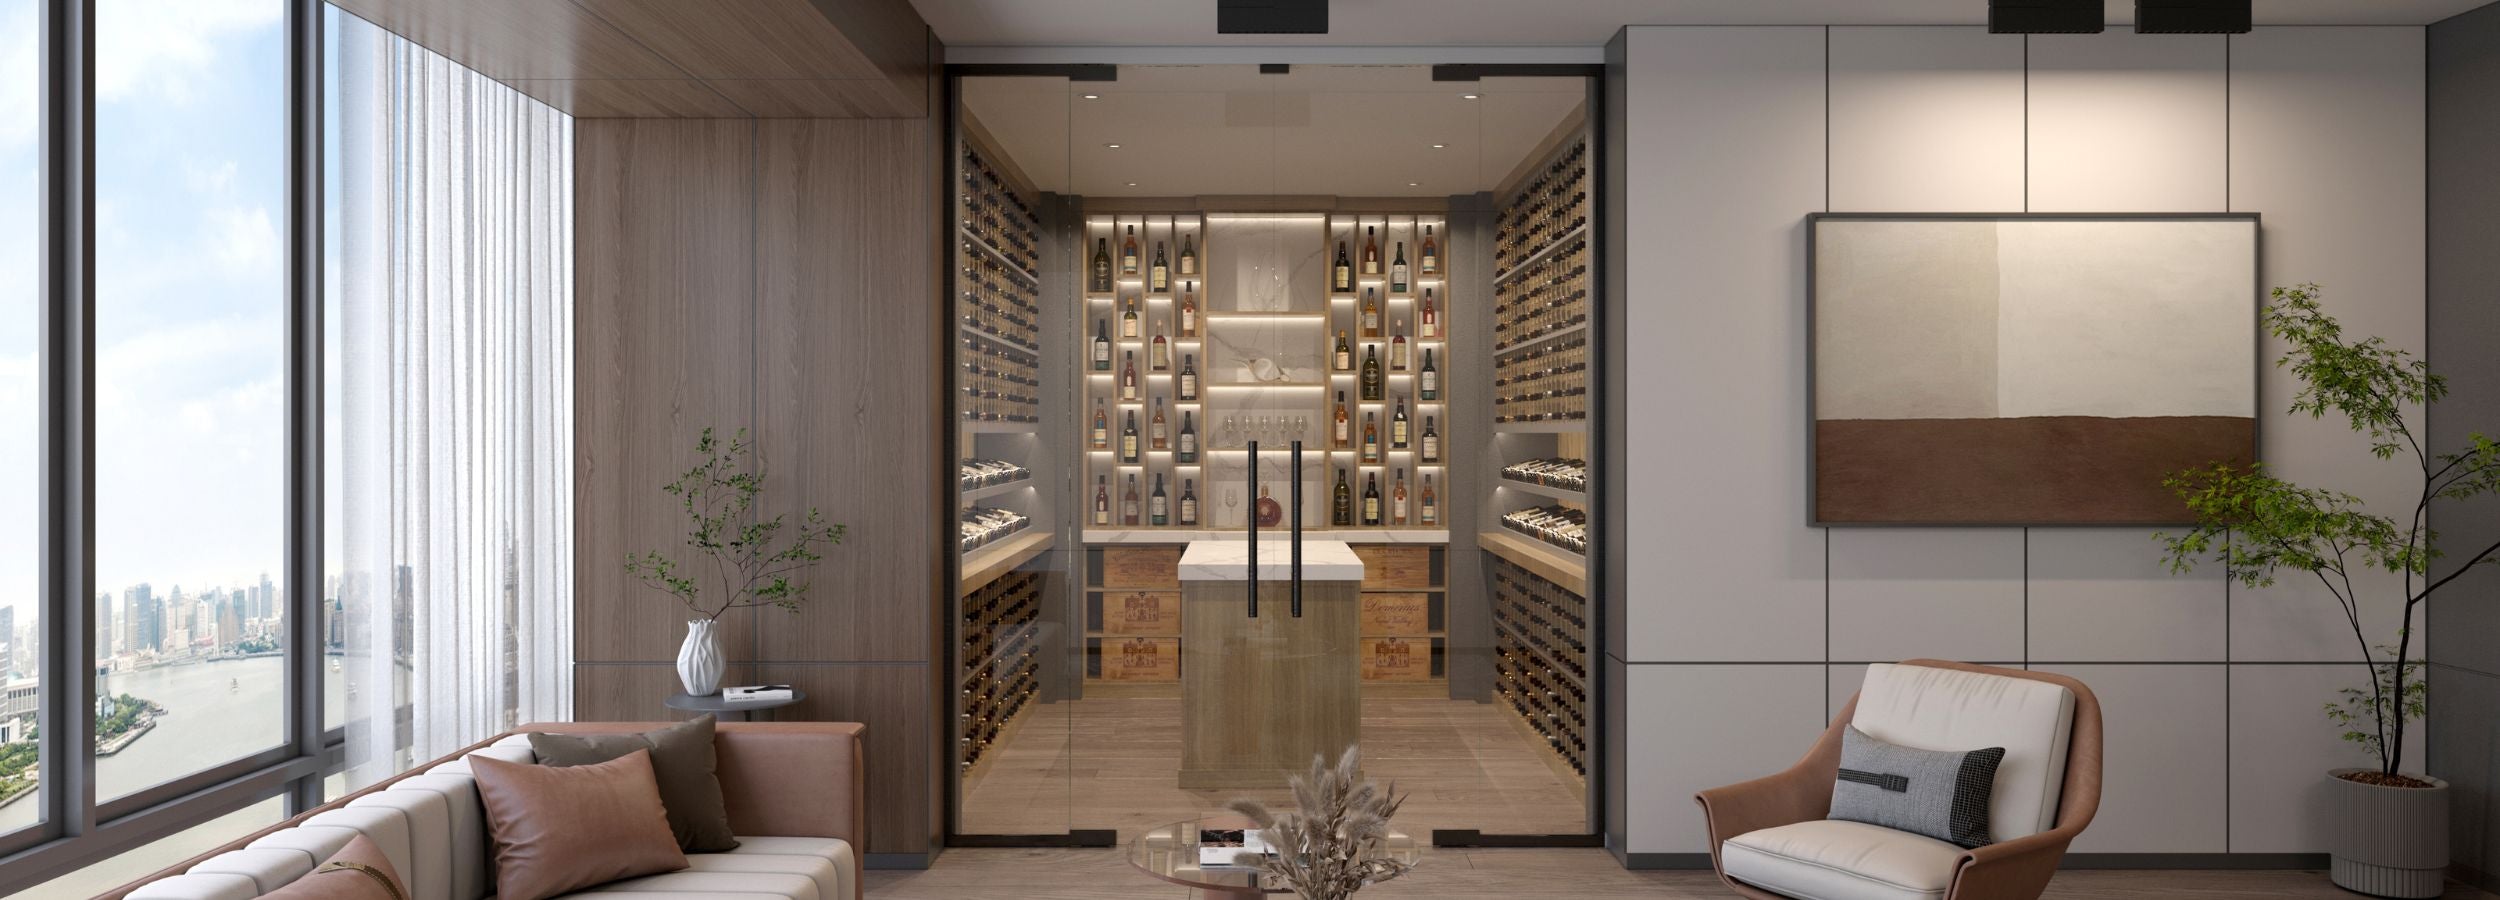 Creating the Ultimate Glass Enclosed Wine Cellar - Modern Home Design - Genuwine Cellars